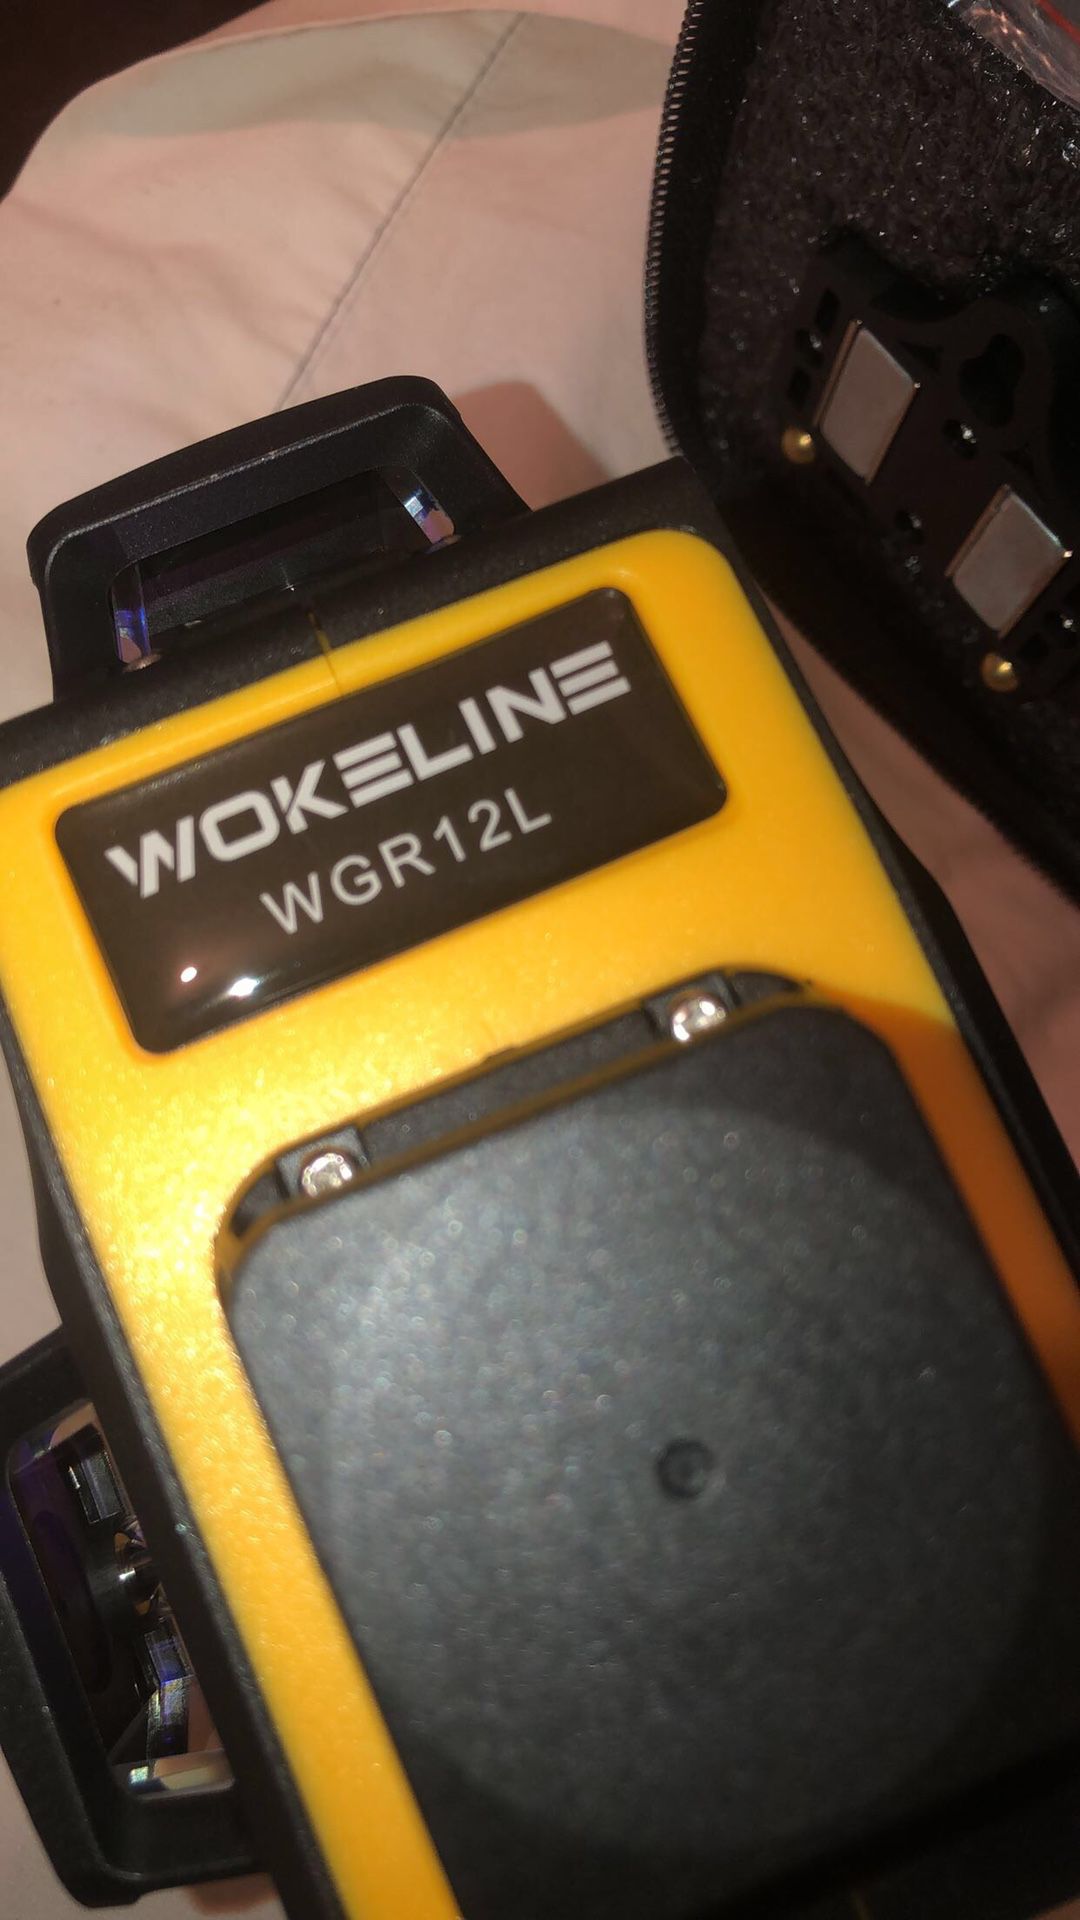 Wokeline WgR12L brand new